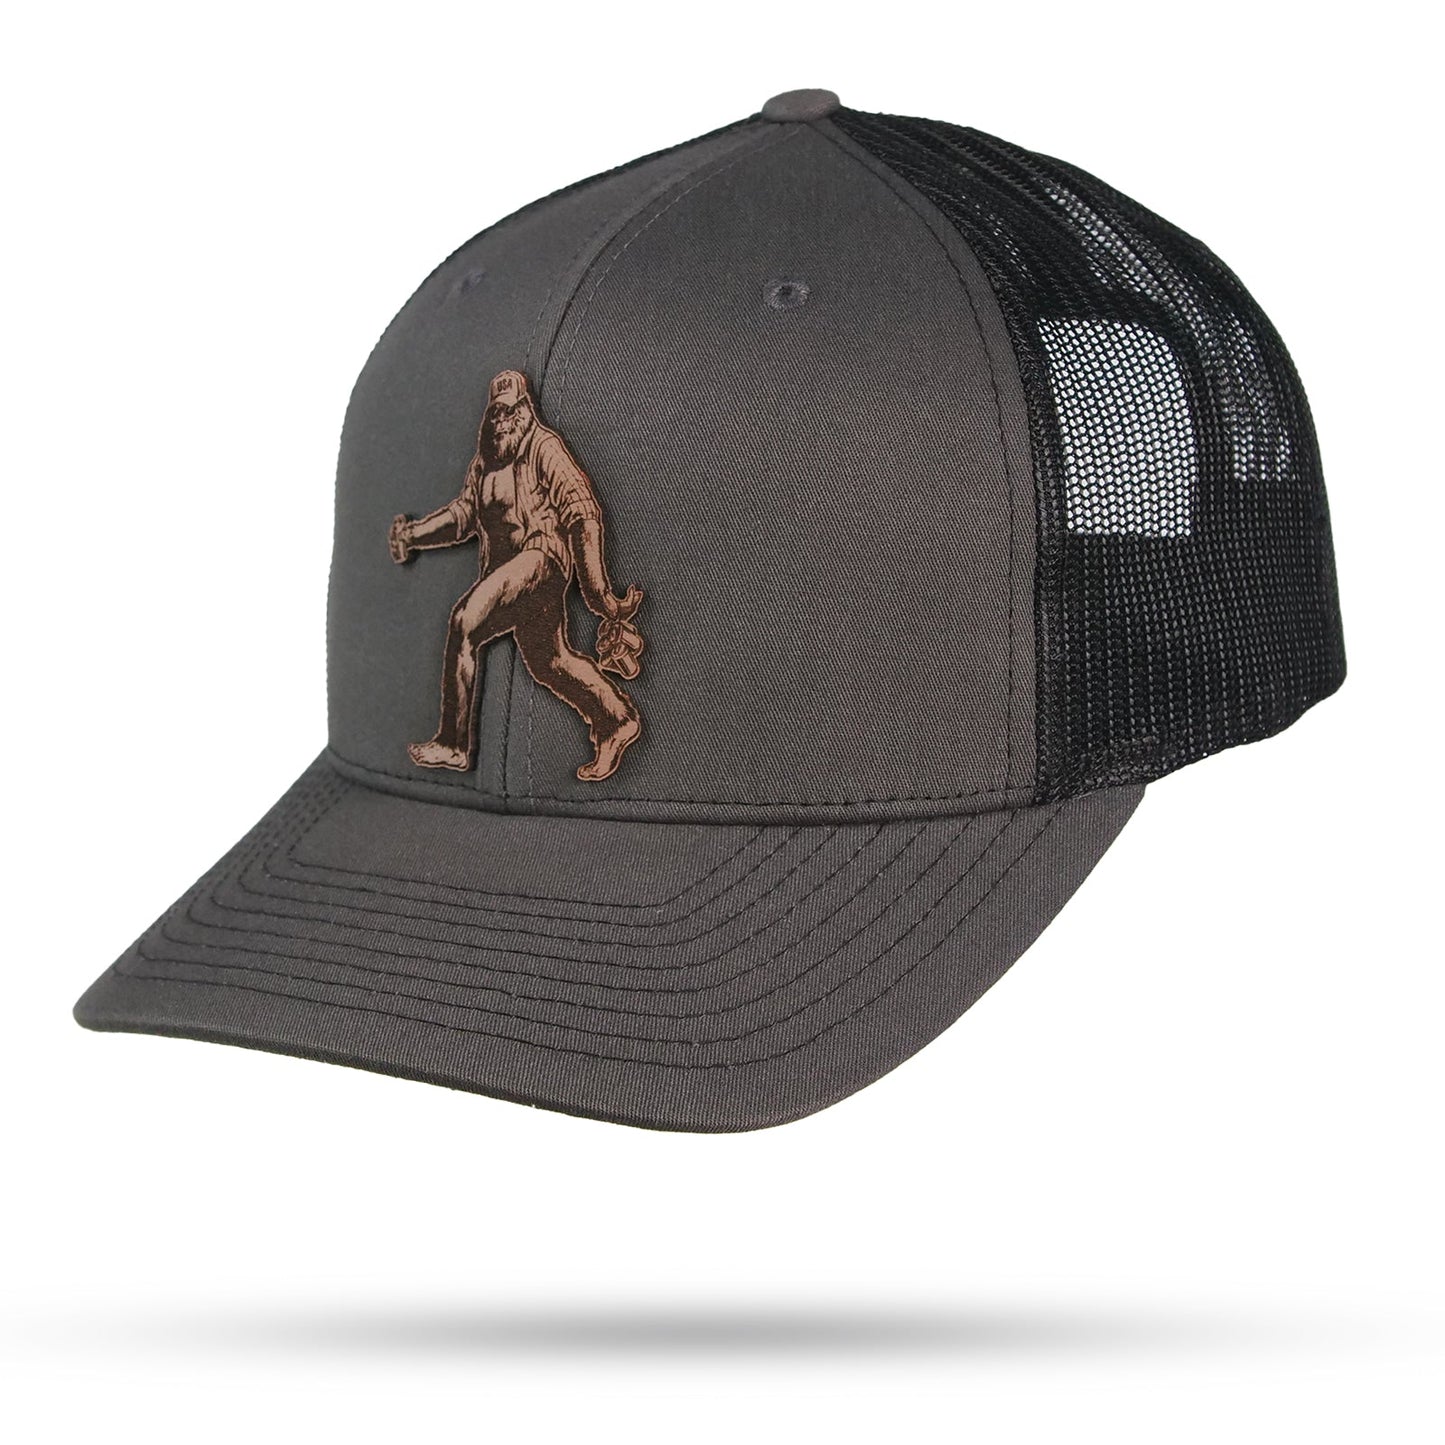 Sasquatch Snapback Trucker Hat - Legendary Design | Wear Your Roots Charcoal/Black